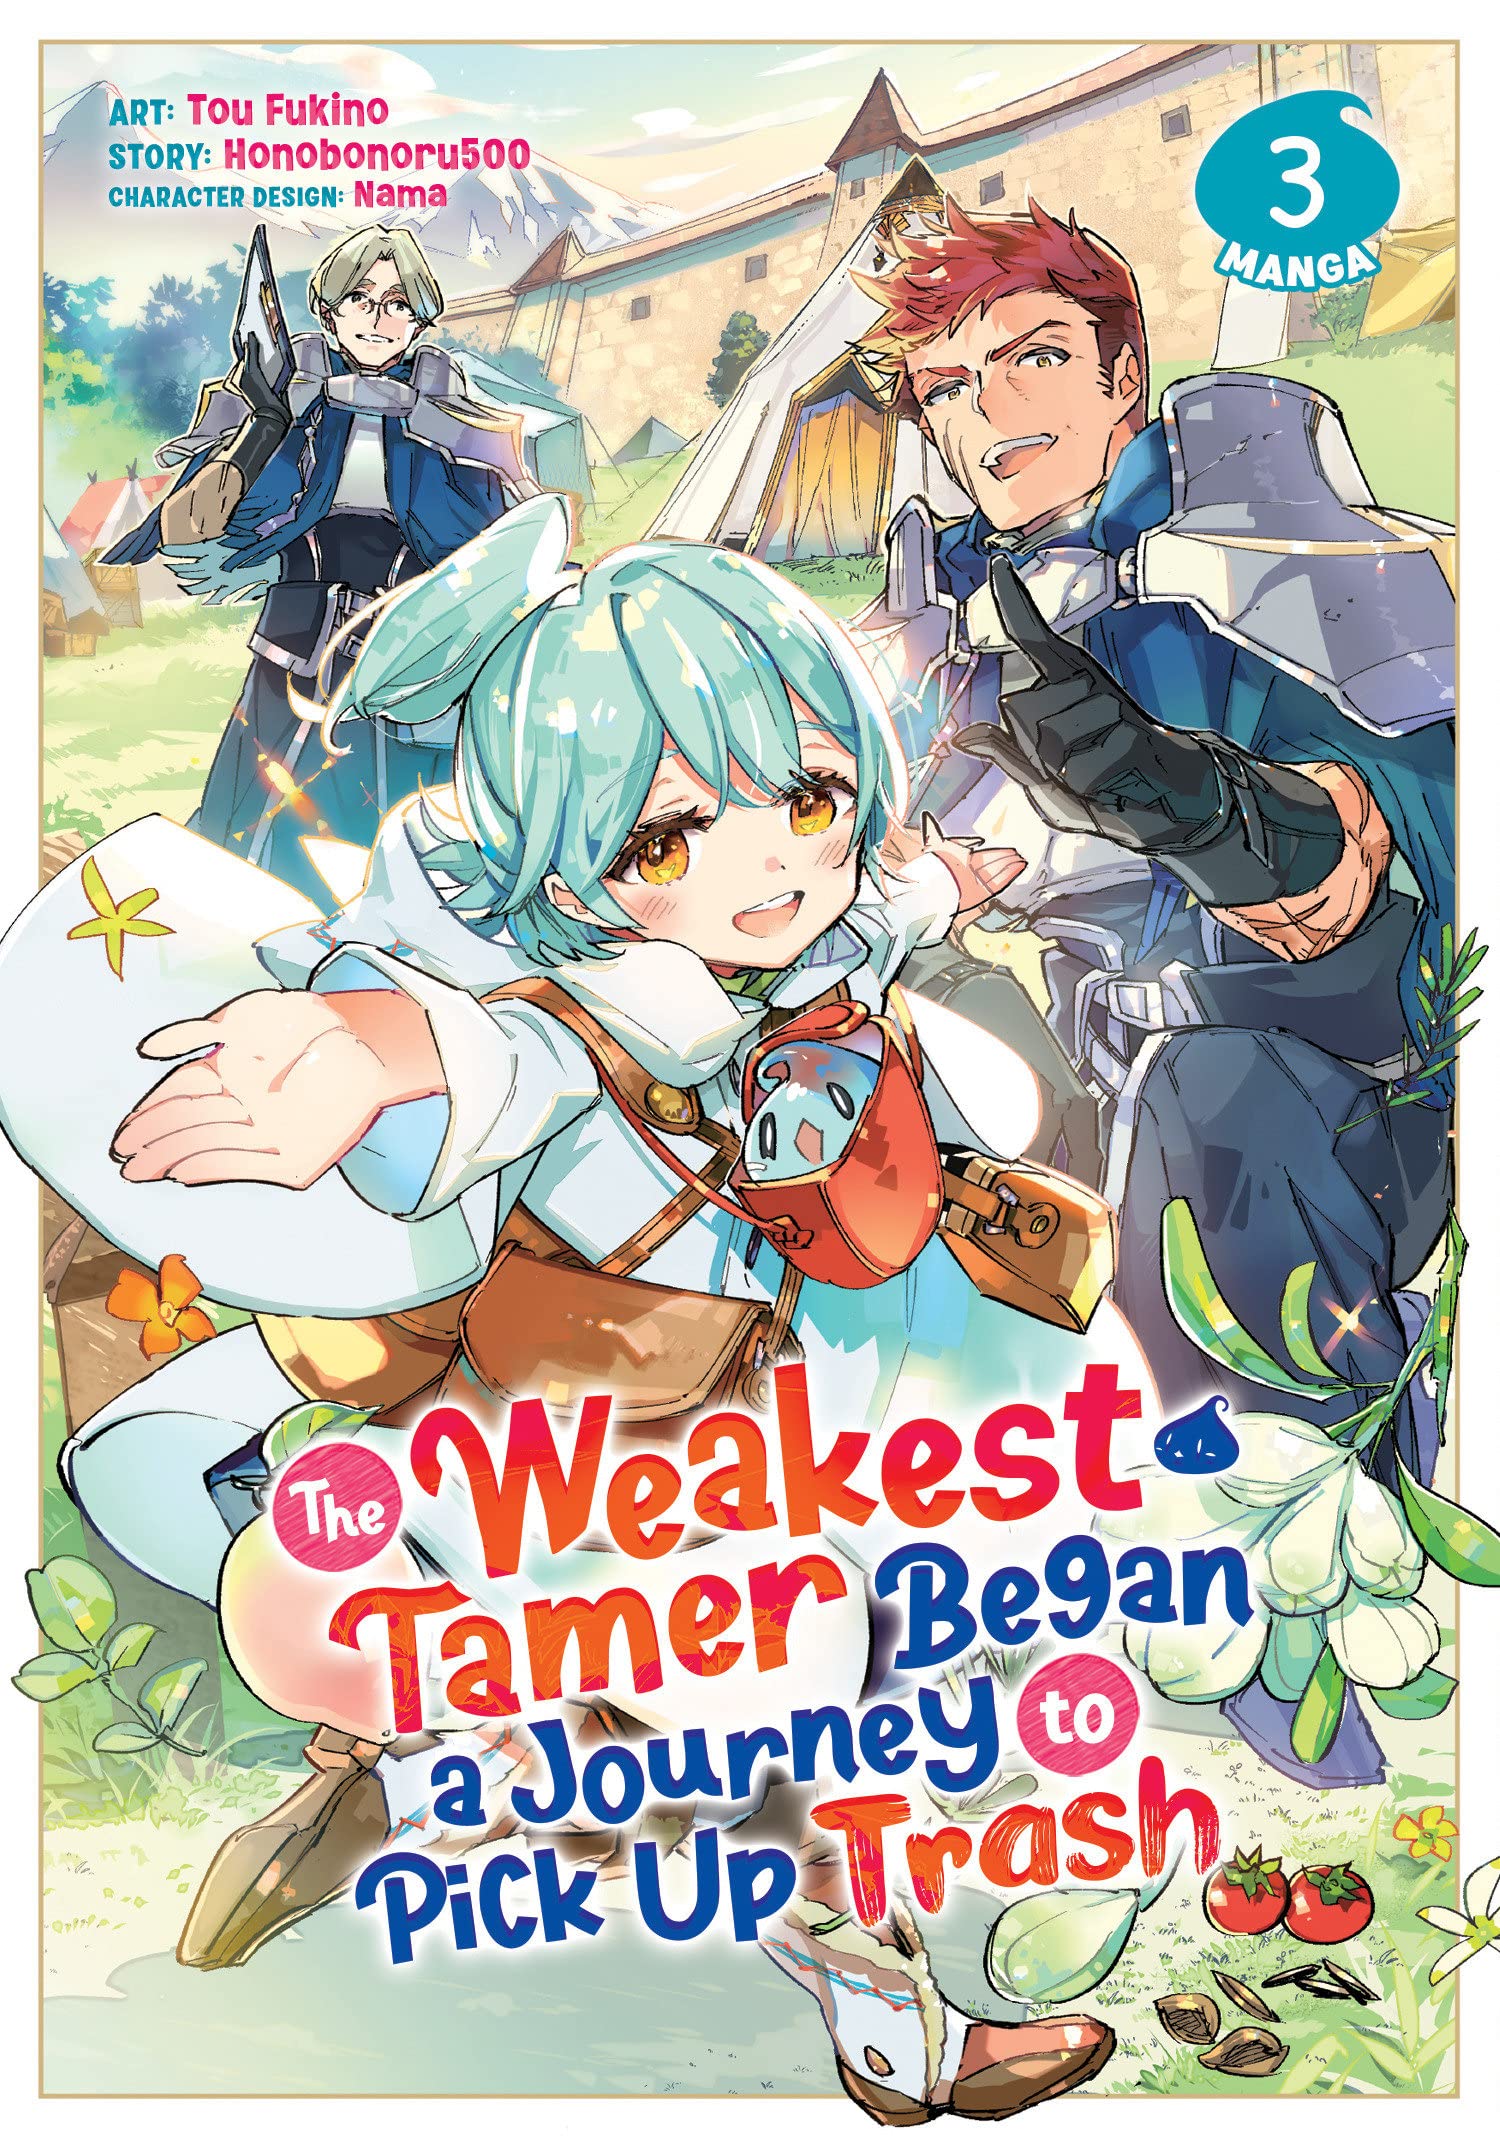 The Weakest Tamer Began a Journey to Pick Up Trash (Manga) Vol. 03